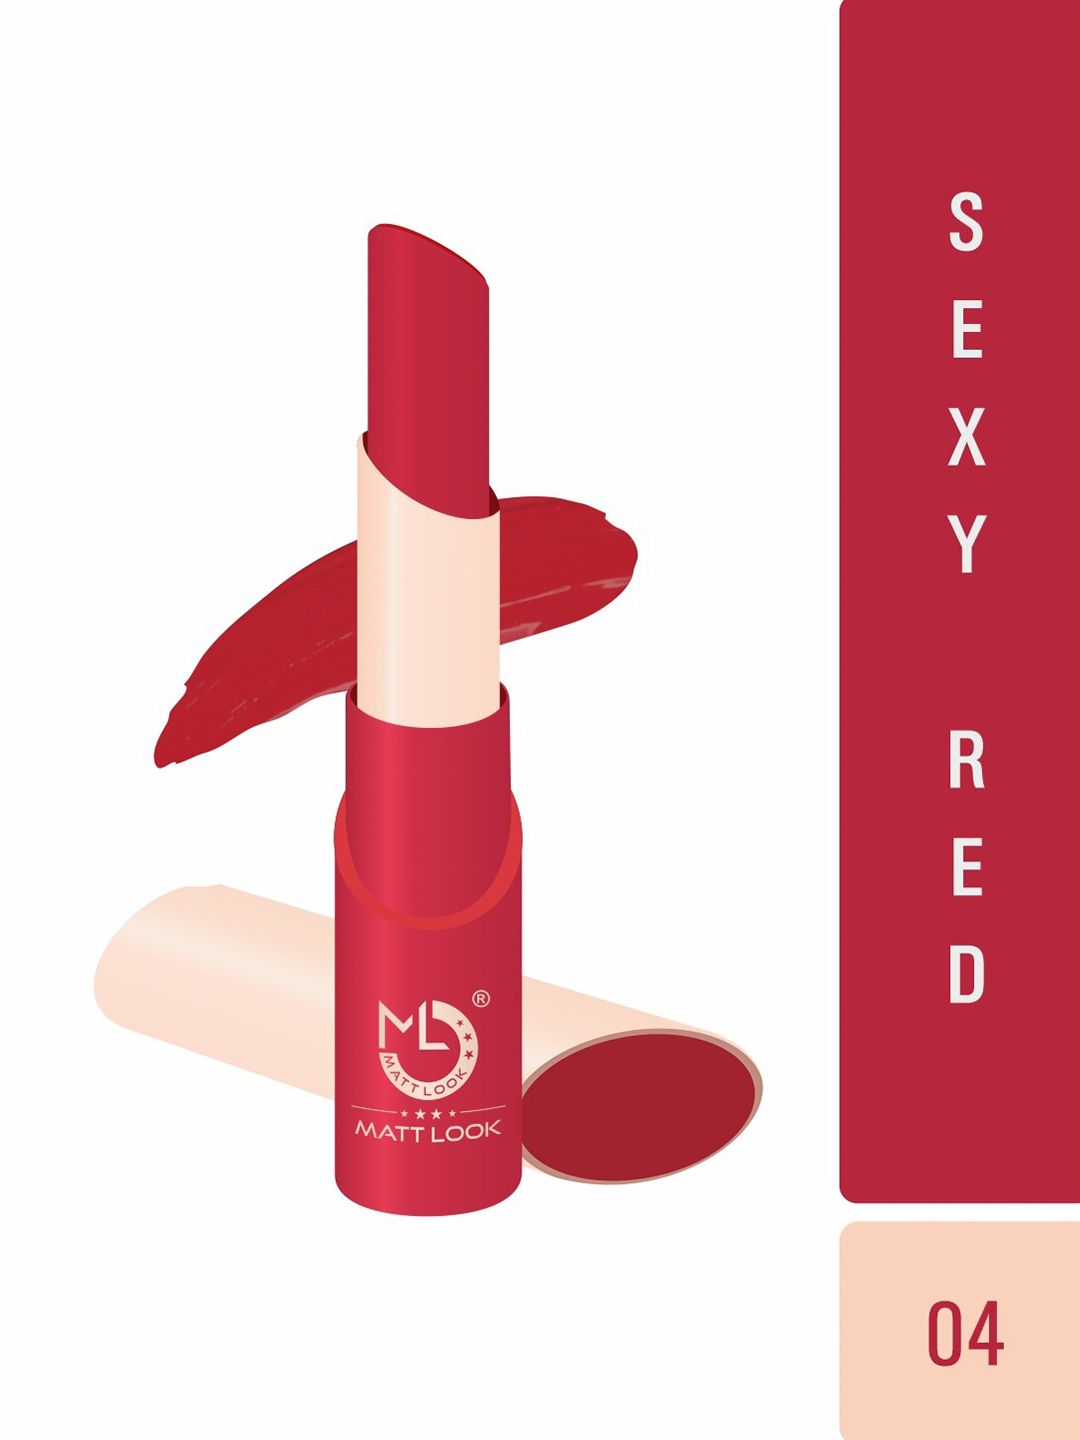 MATTLOOK Matt look Vivid Matte Lipstick - Sexy Red-04 Price in India